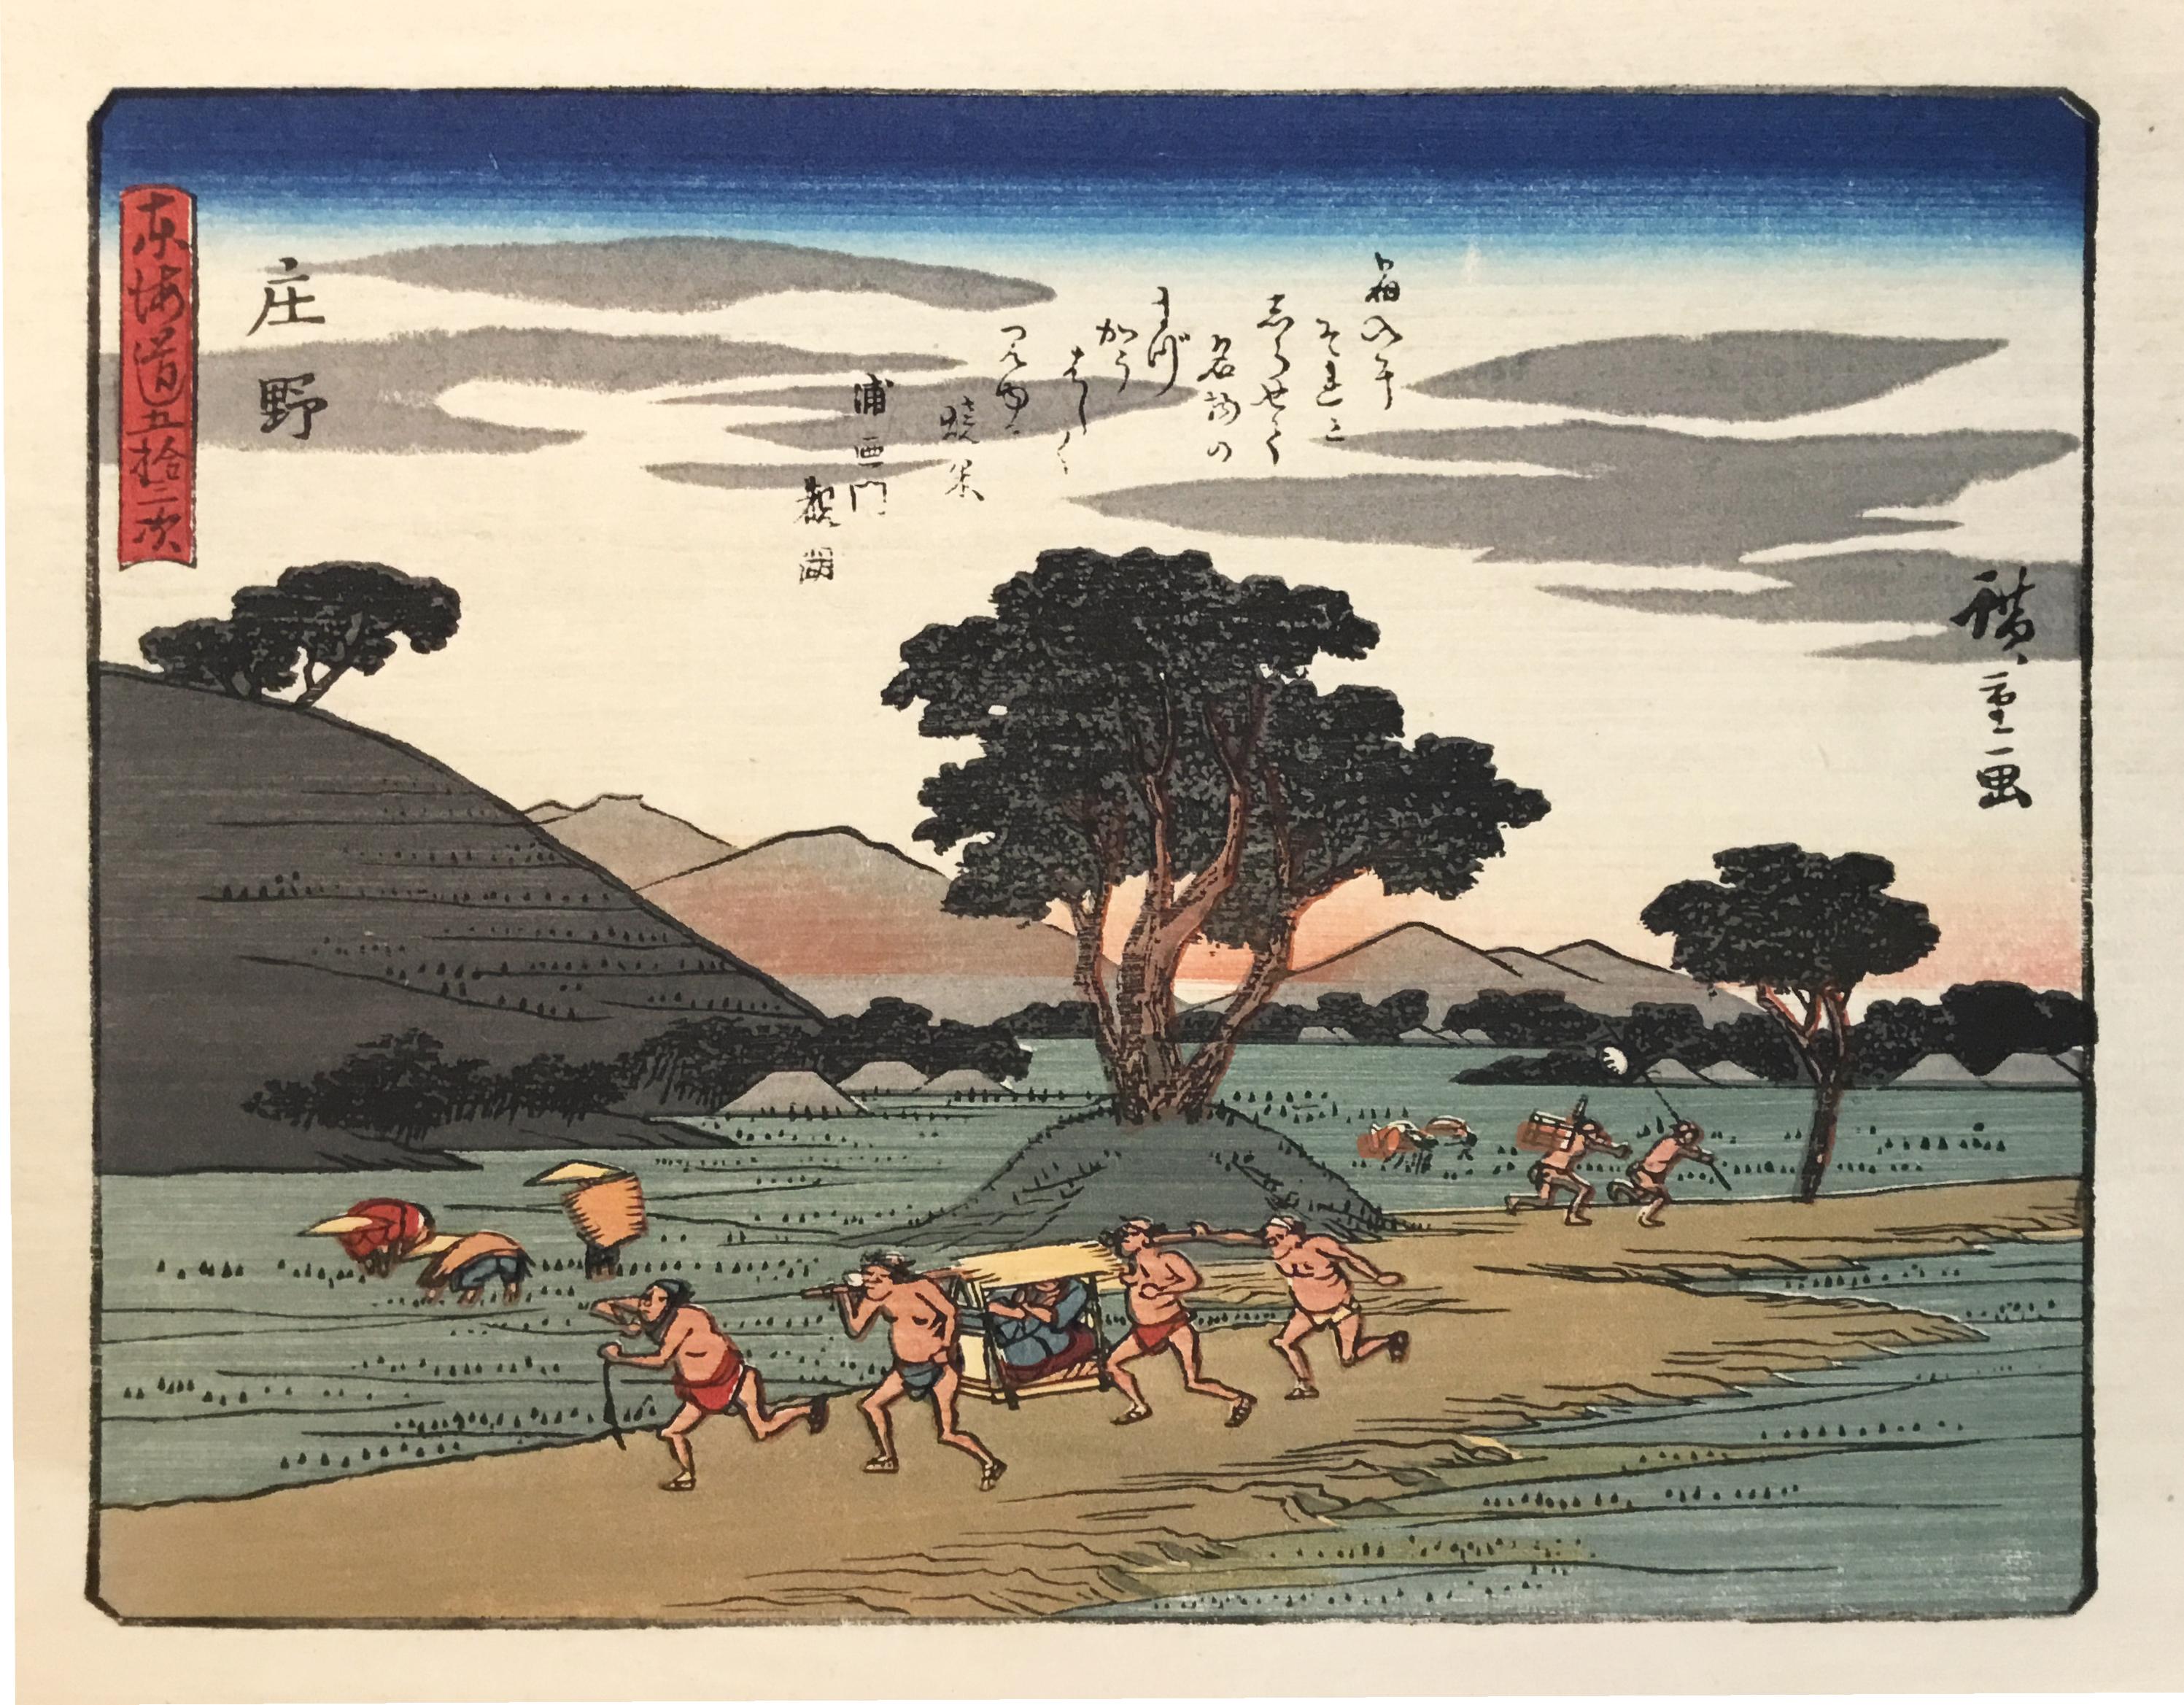 Utagawa Hiroshige (Ando Hiroshige) Landscape Print - 'View of Shono', After Utagawa Hiroshige, Ukiyo-E Woodblock, Tokaido, Edo